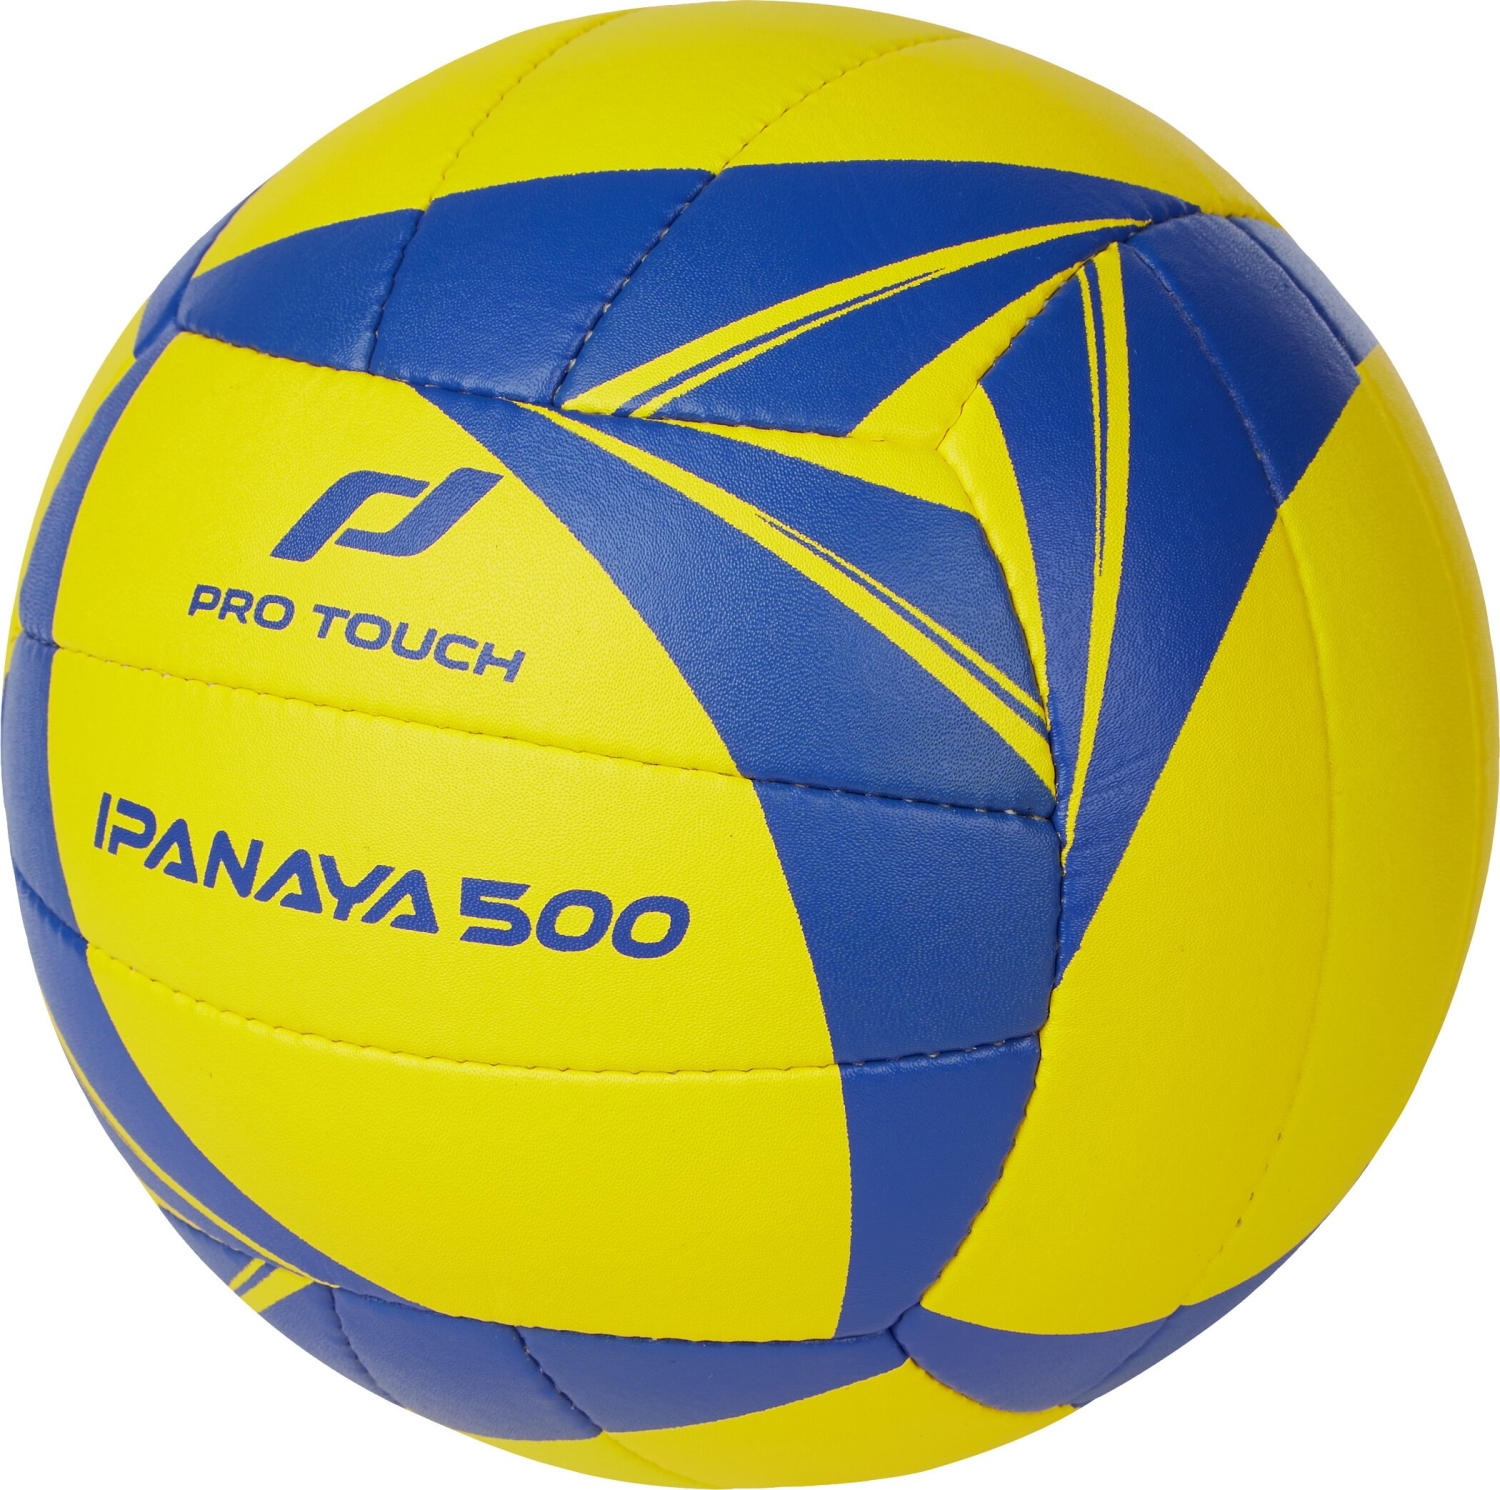 Beach-Volleyball Ipanaya 